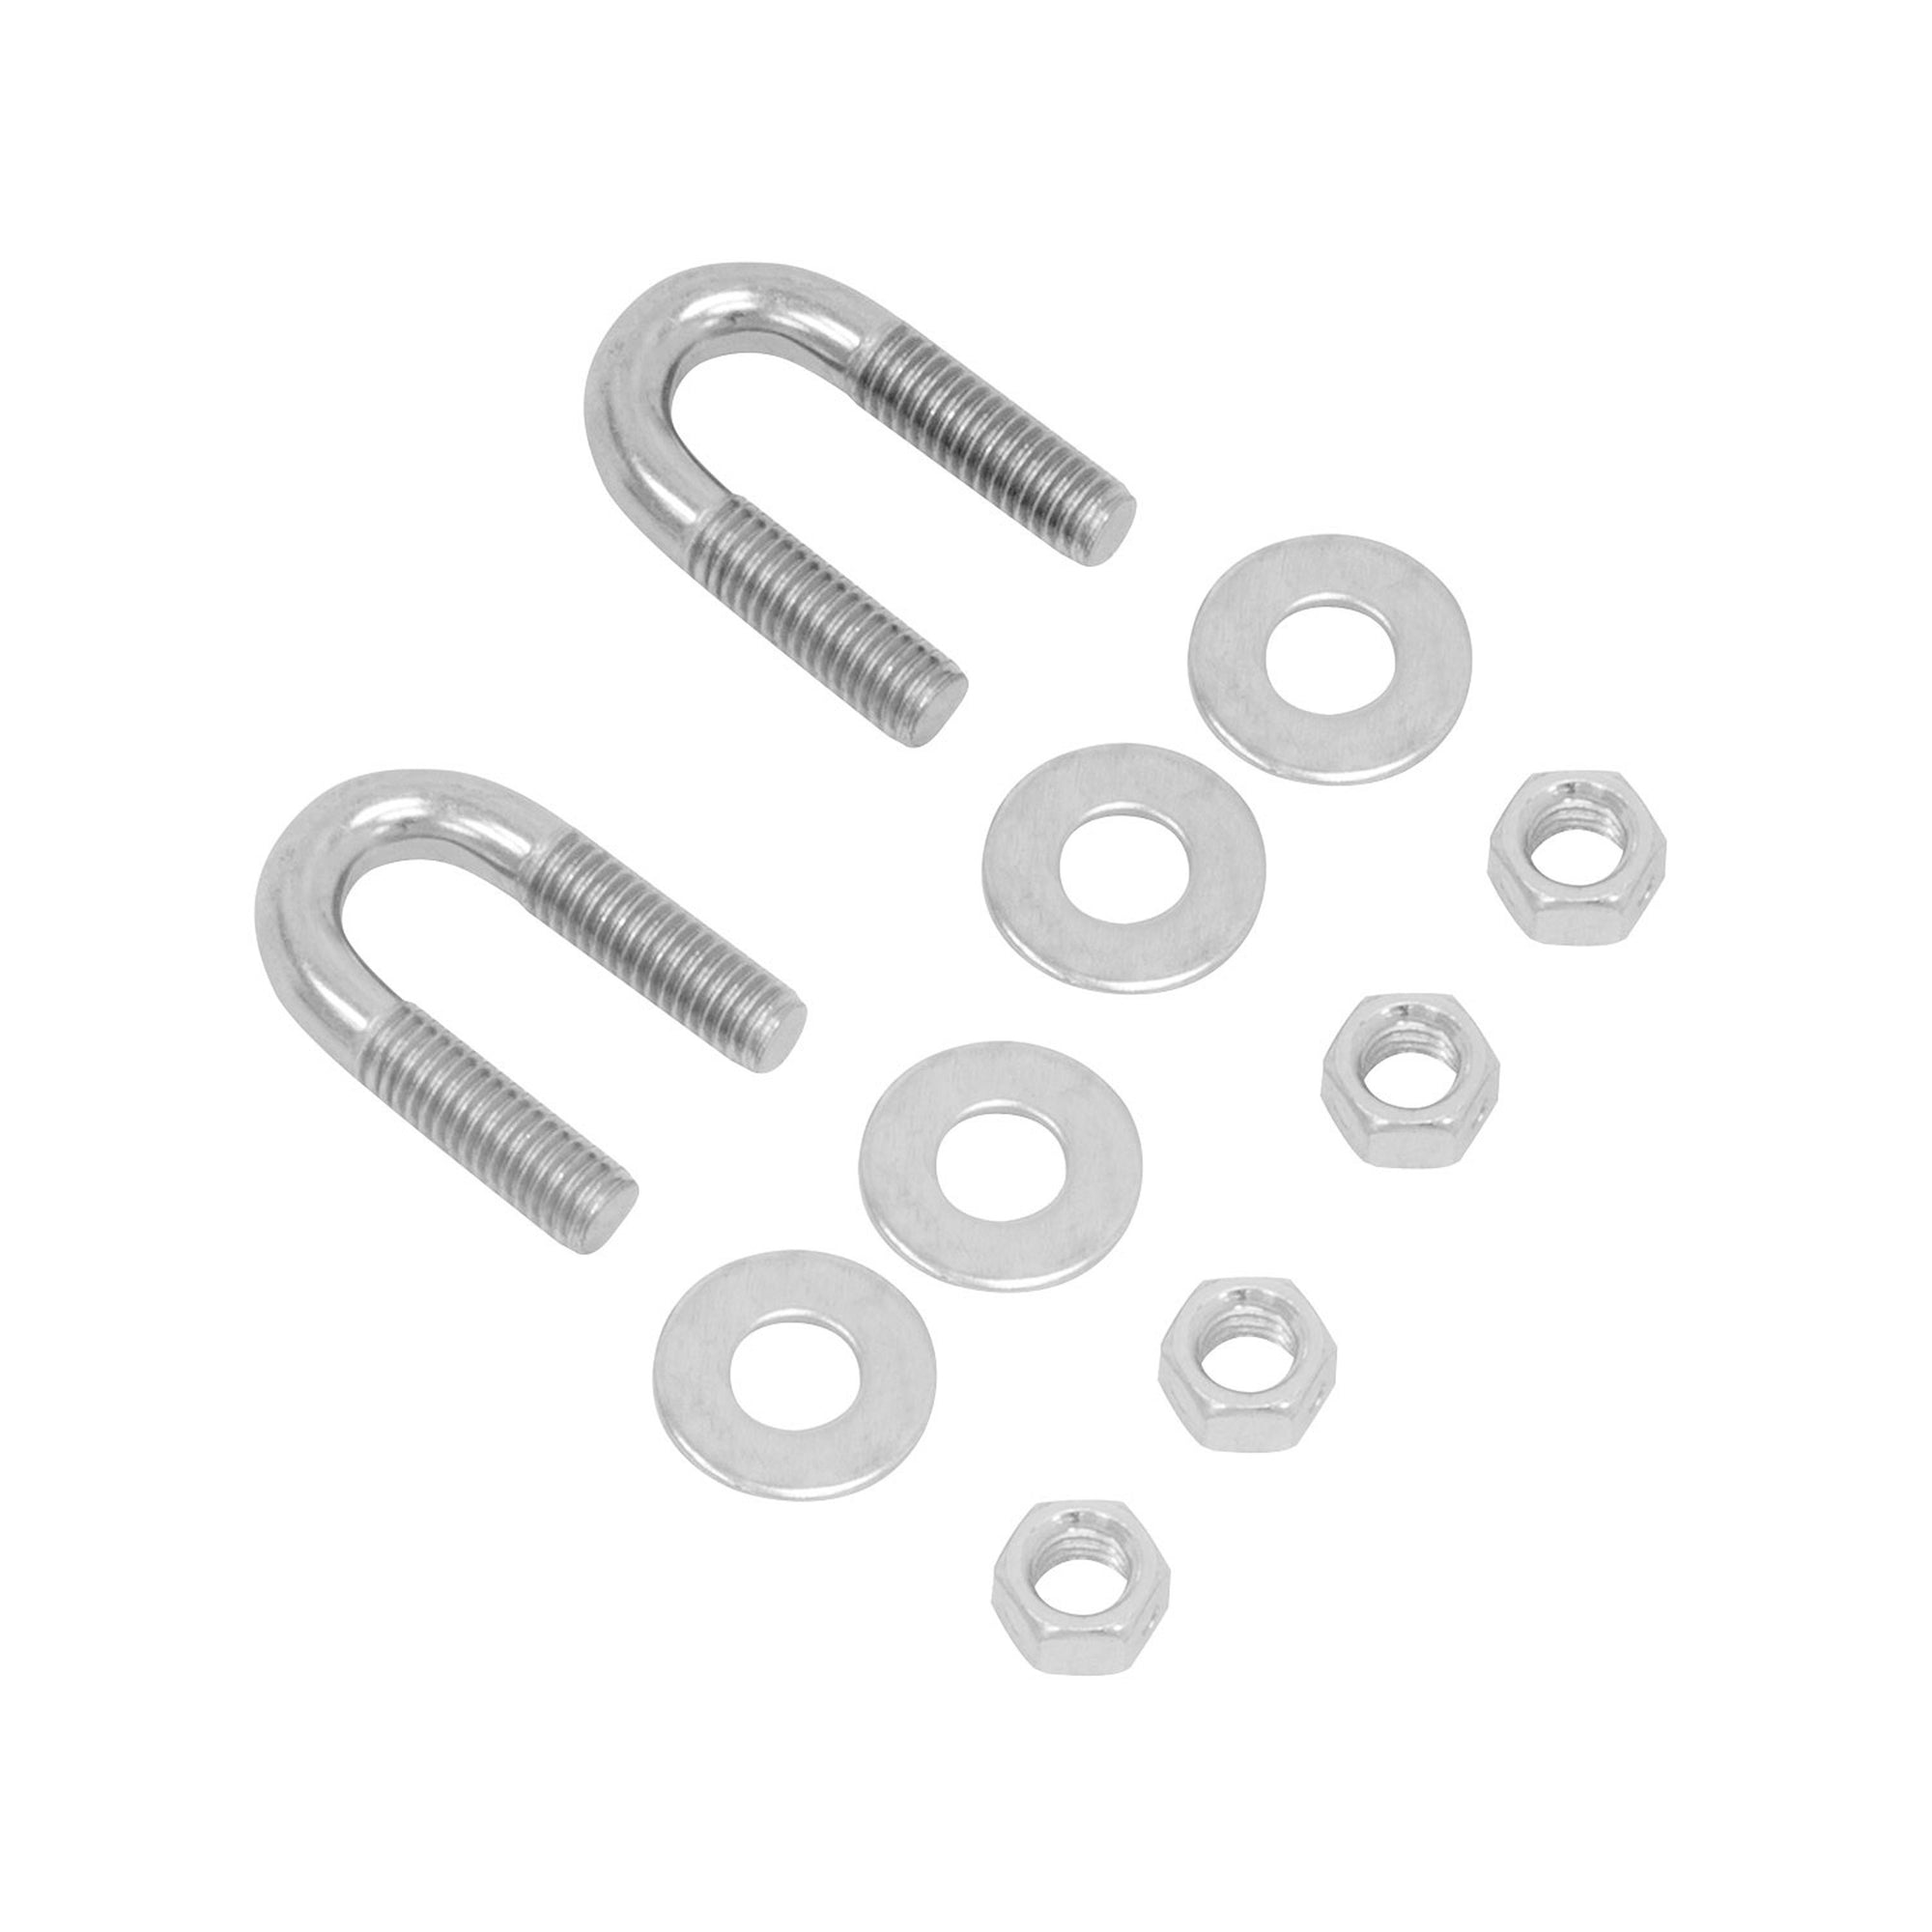 Reese 58032 Trunnion Bar Weight Distribution Kit - (2) U-Bolts, (4) Lock Nuts, (4) Flat Washers